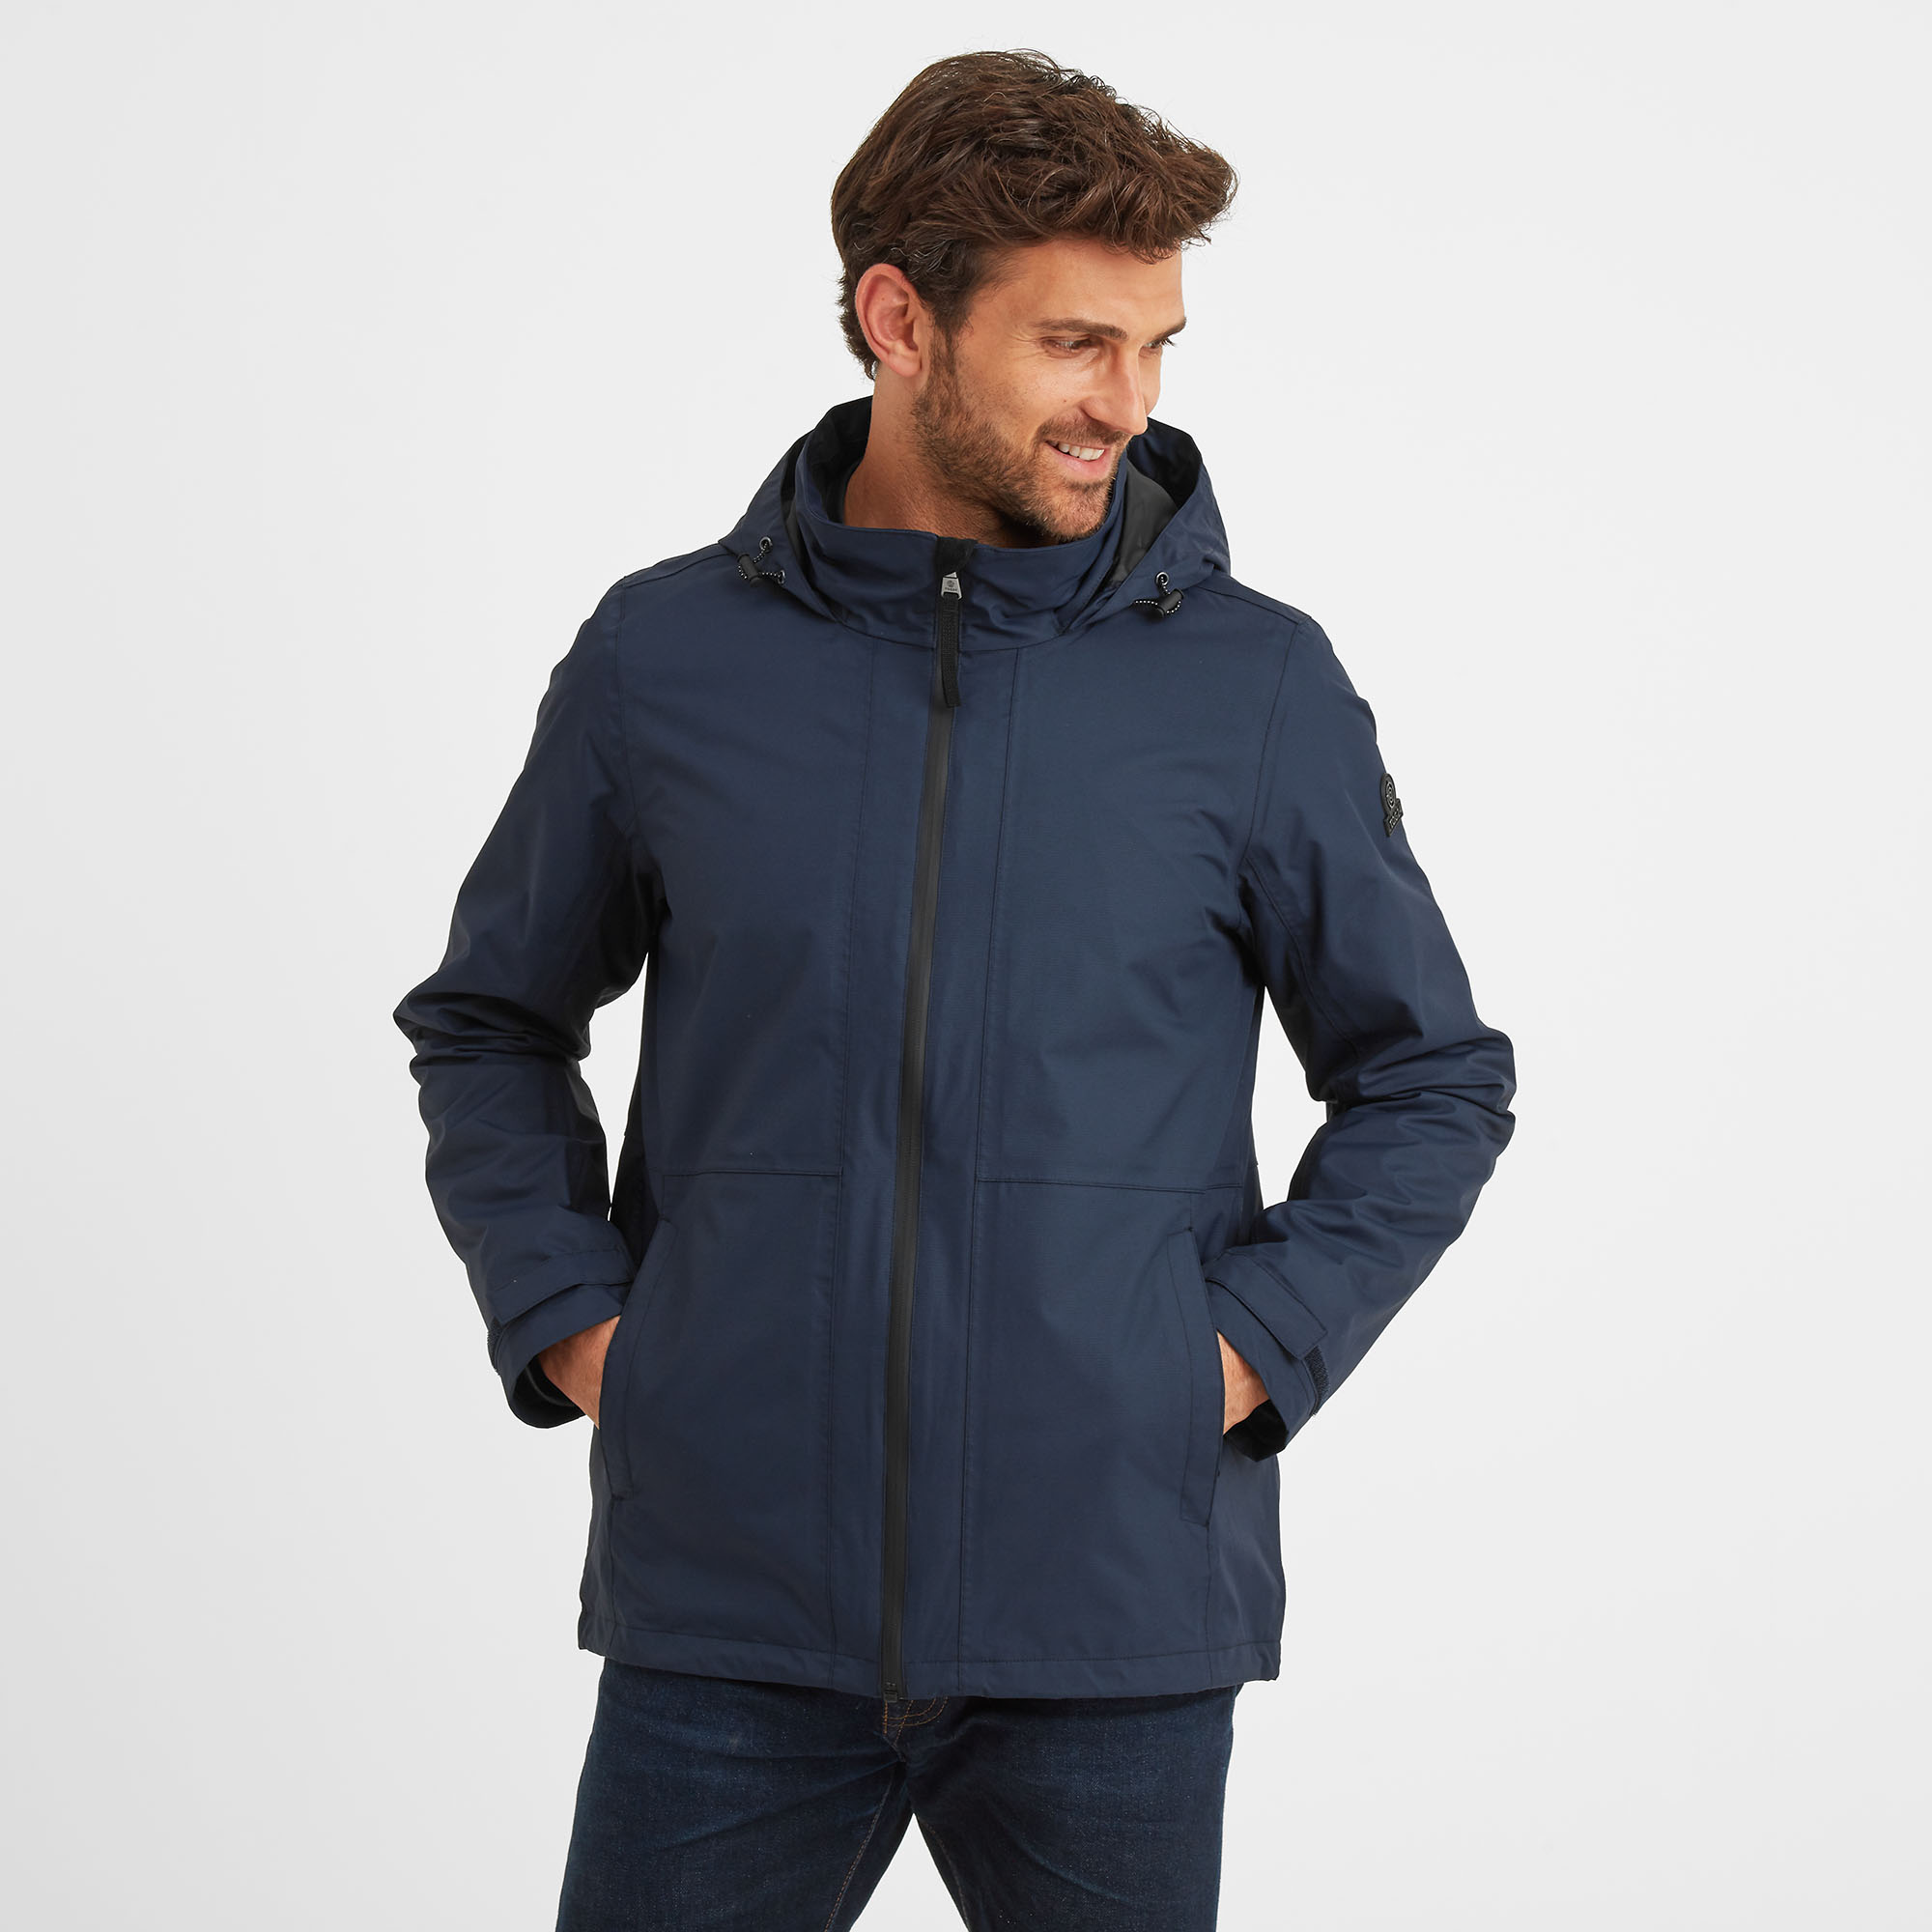 TOG24 Gribton Mens Waterproof Hooded Jacket Raincoat Breathable ...